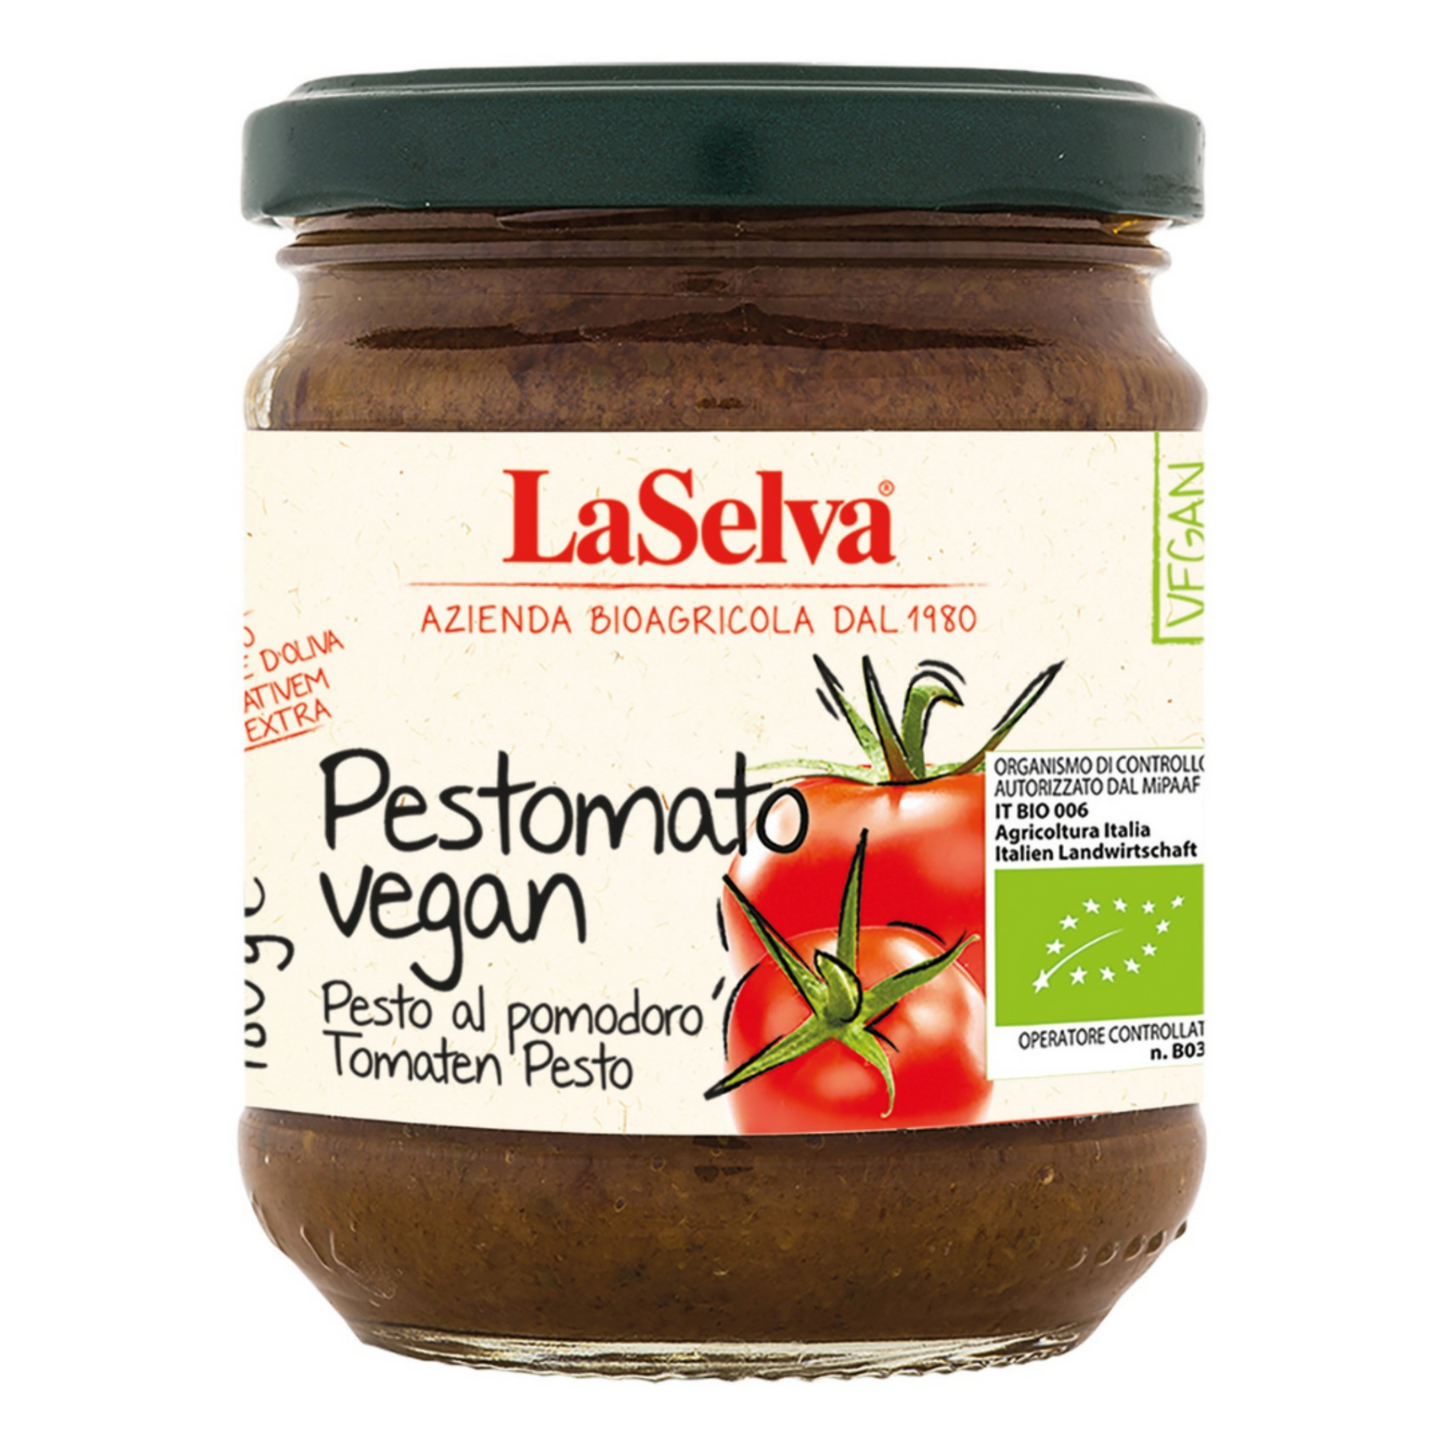 Pestomato vegan, 180g